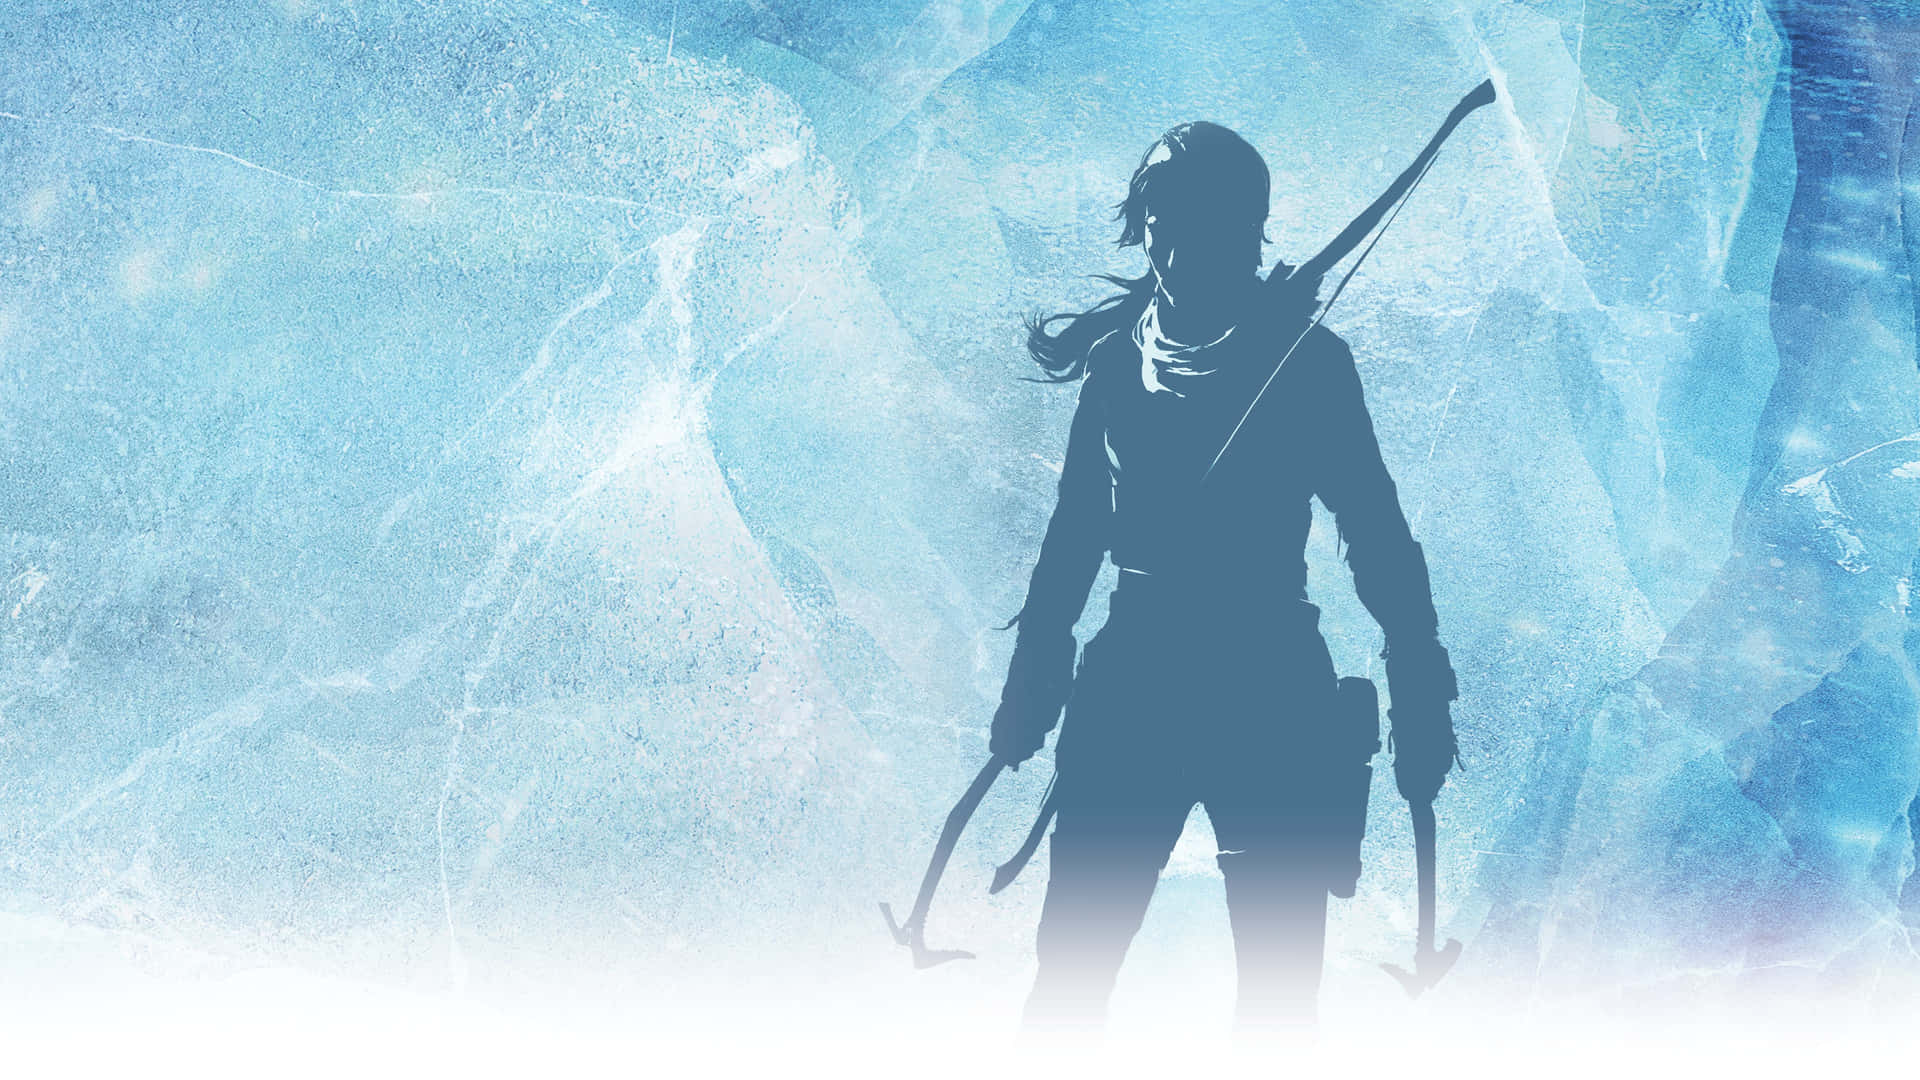 Lara Croft Ice Cave Silhouette Wallpaper